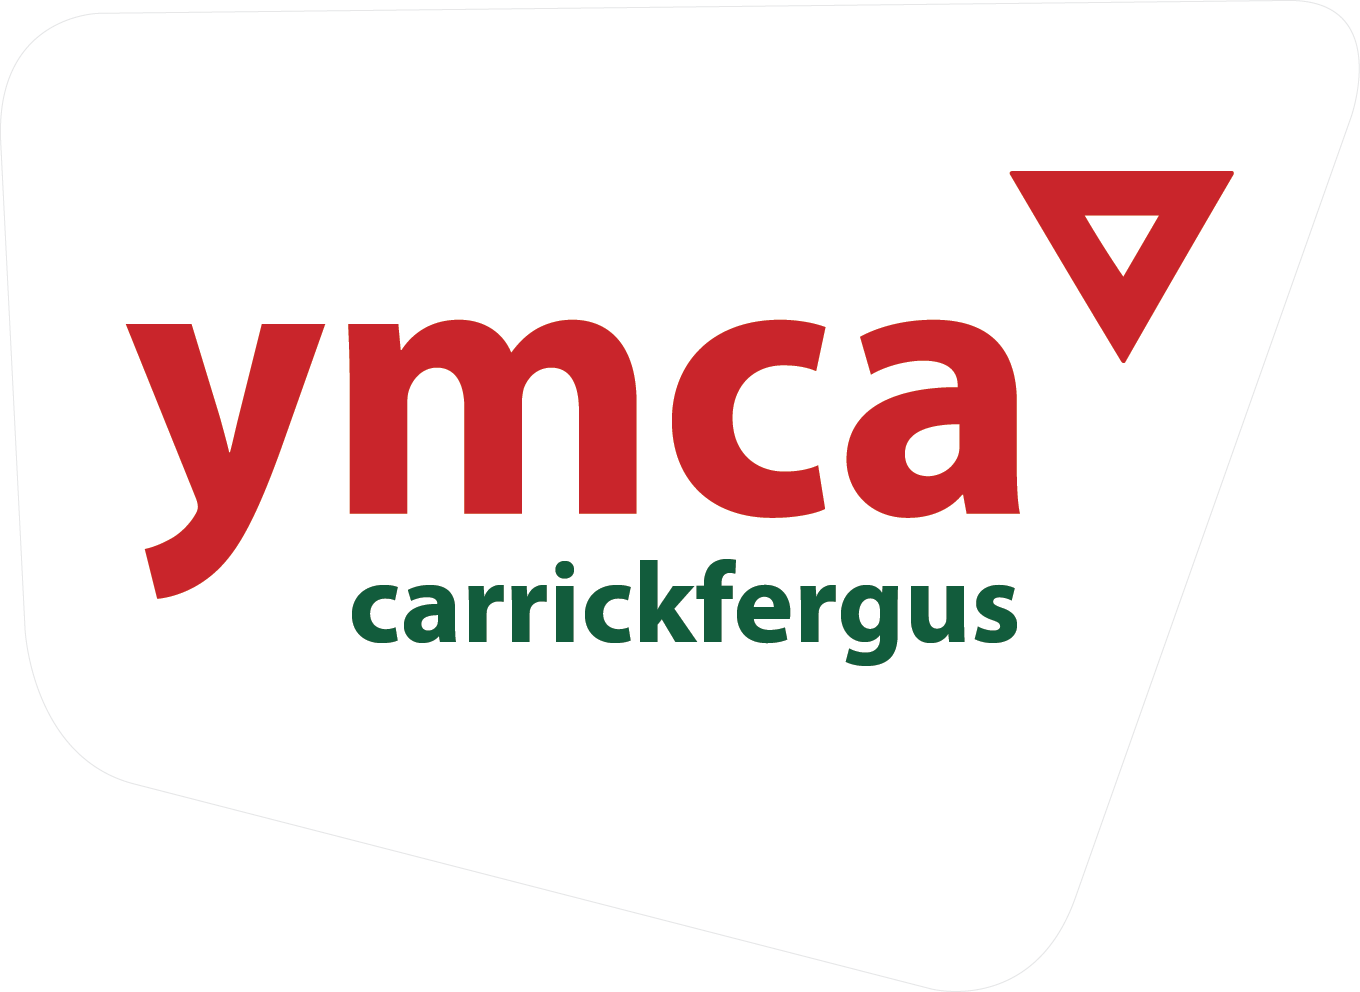 YMCA Carrickfergus logo